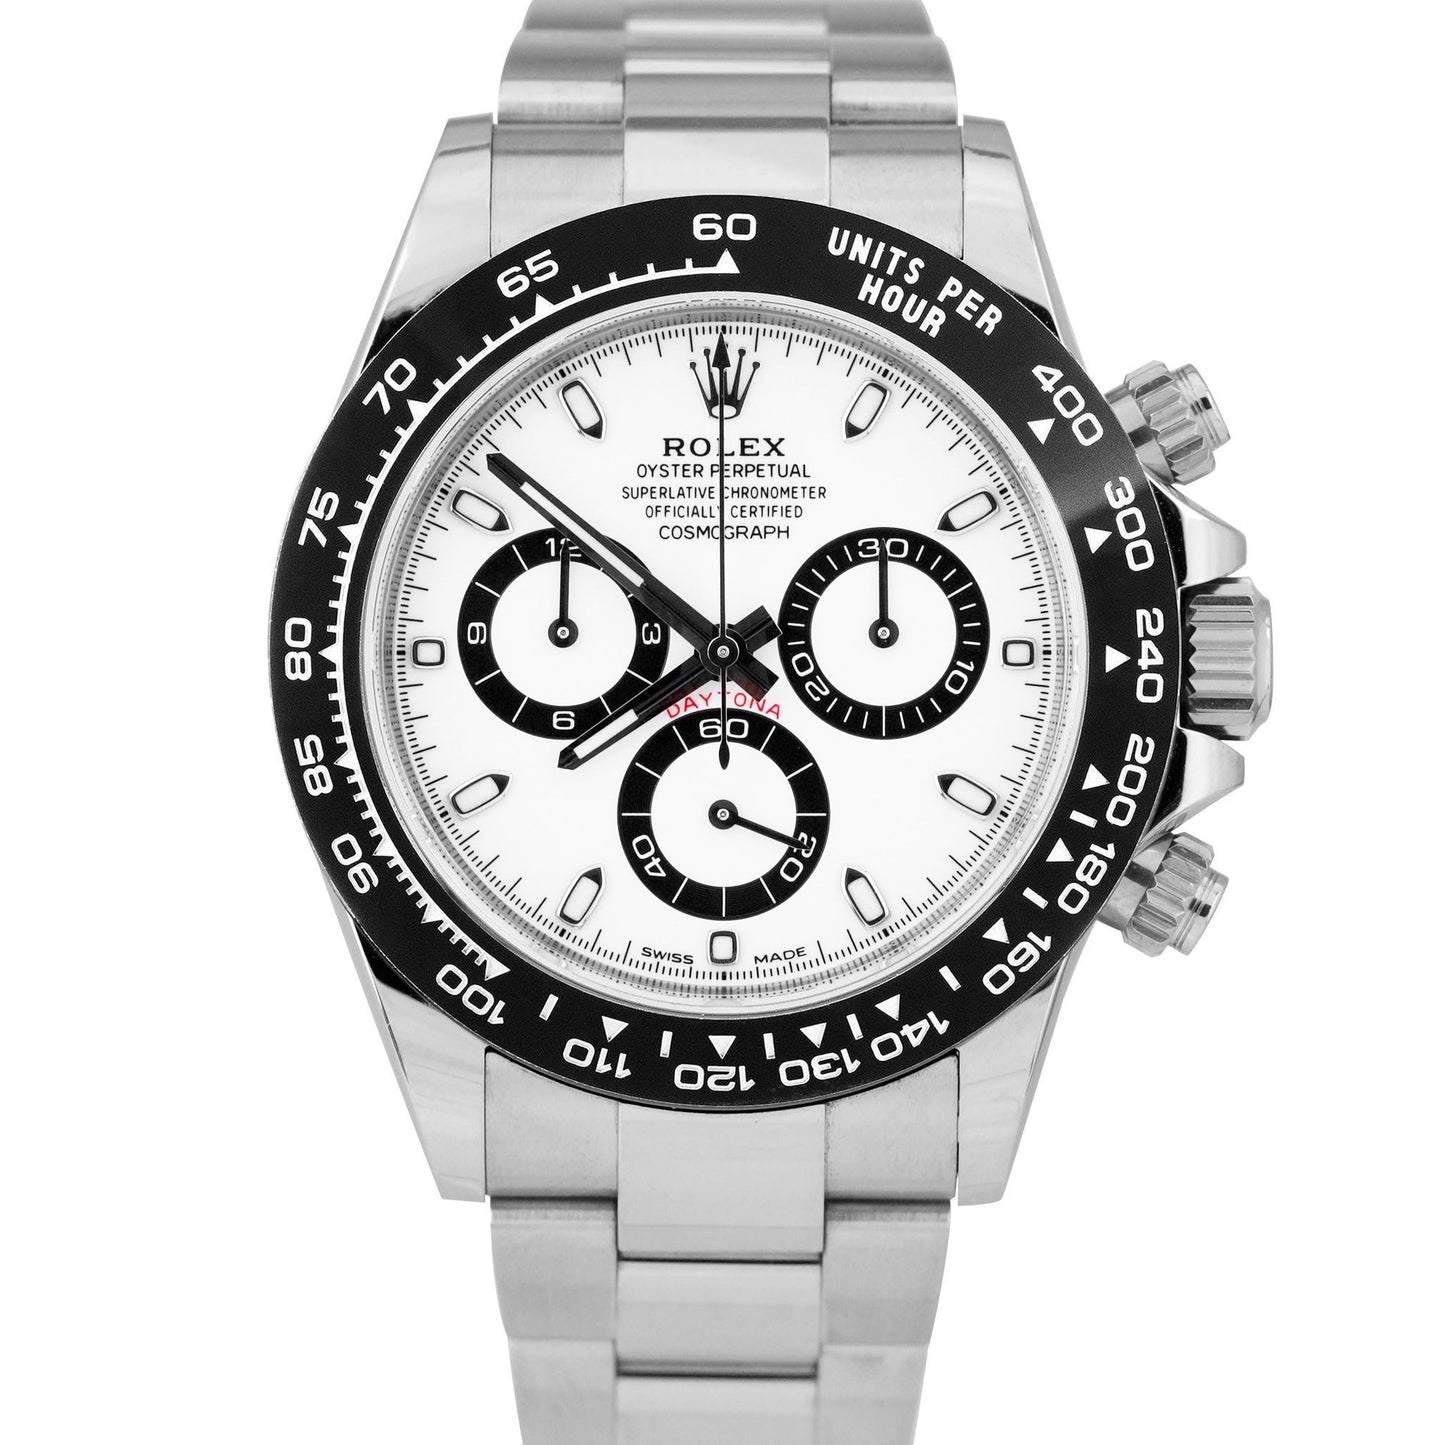 NEW JAN. 2023 Rolex Daytona Cosmograph White Stainless Steel Watch 116500 LN